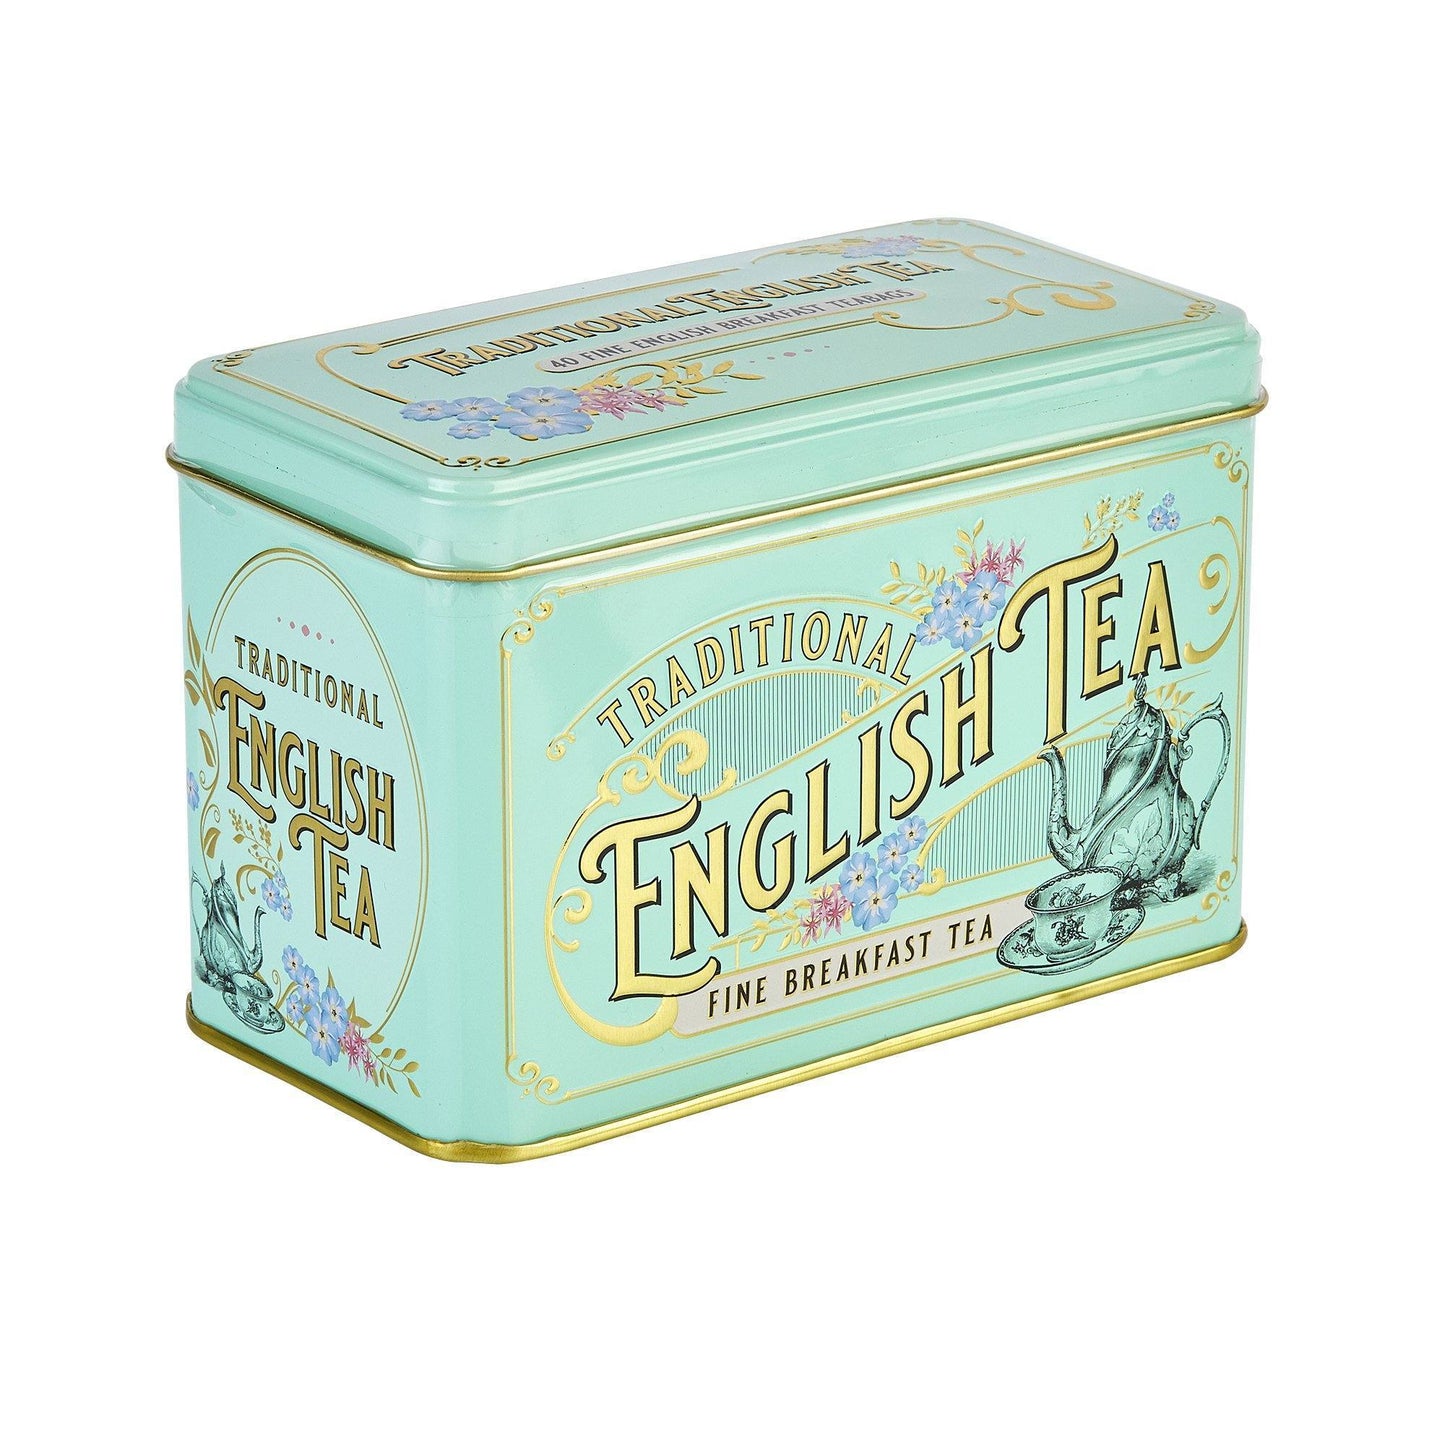 Vintage Victorian Tea Gift Collection Black Tea New English Teas 